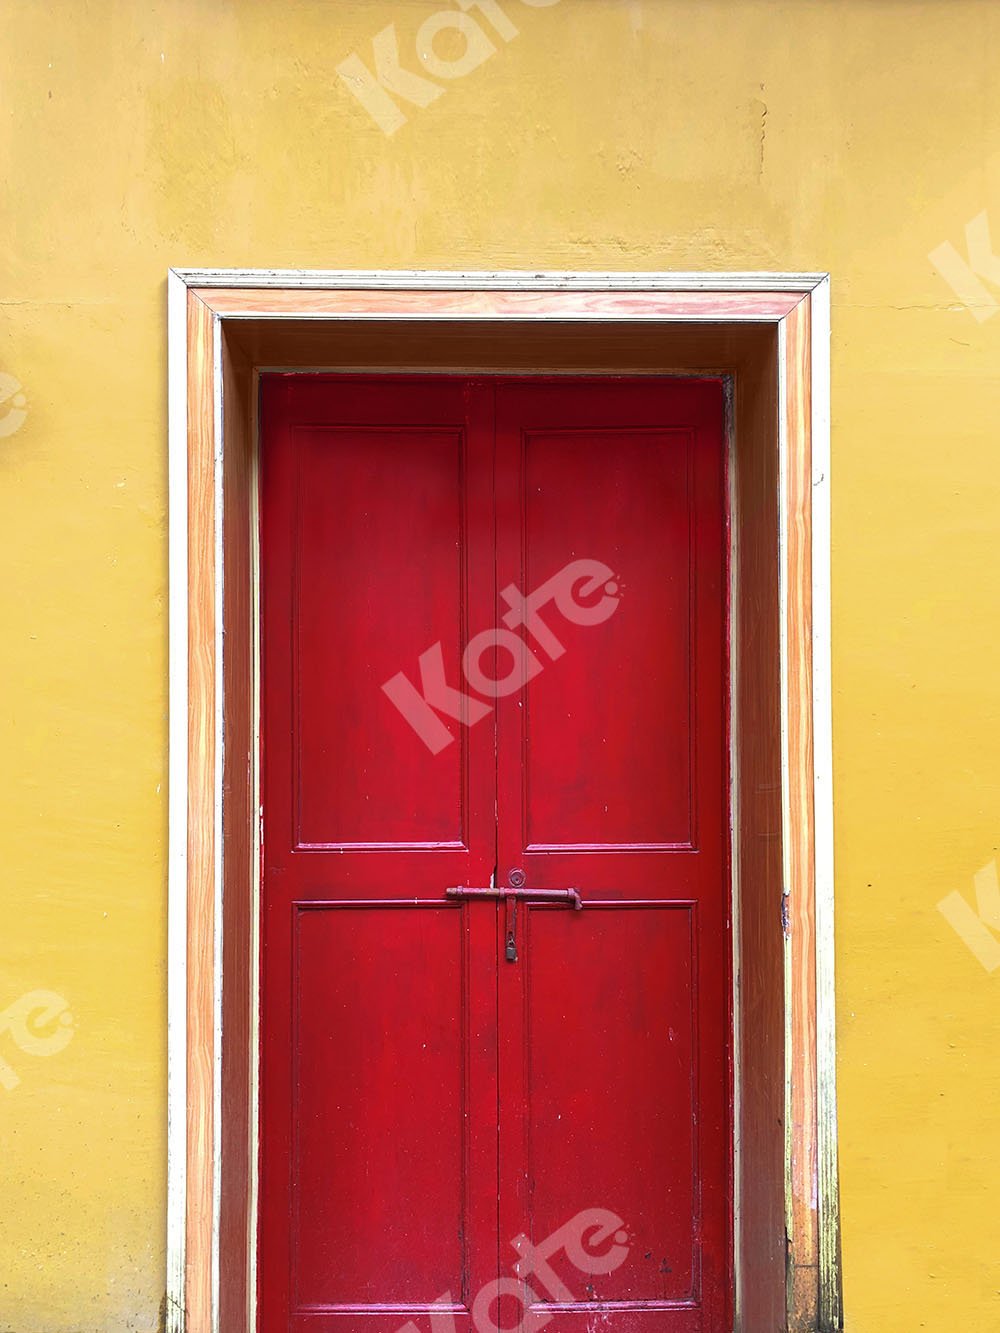 Kate Red Door Backdrop Designed by Emetselch